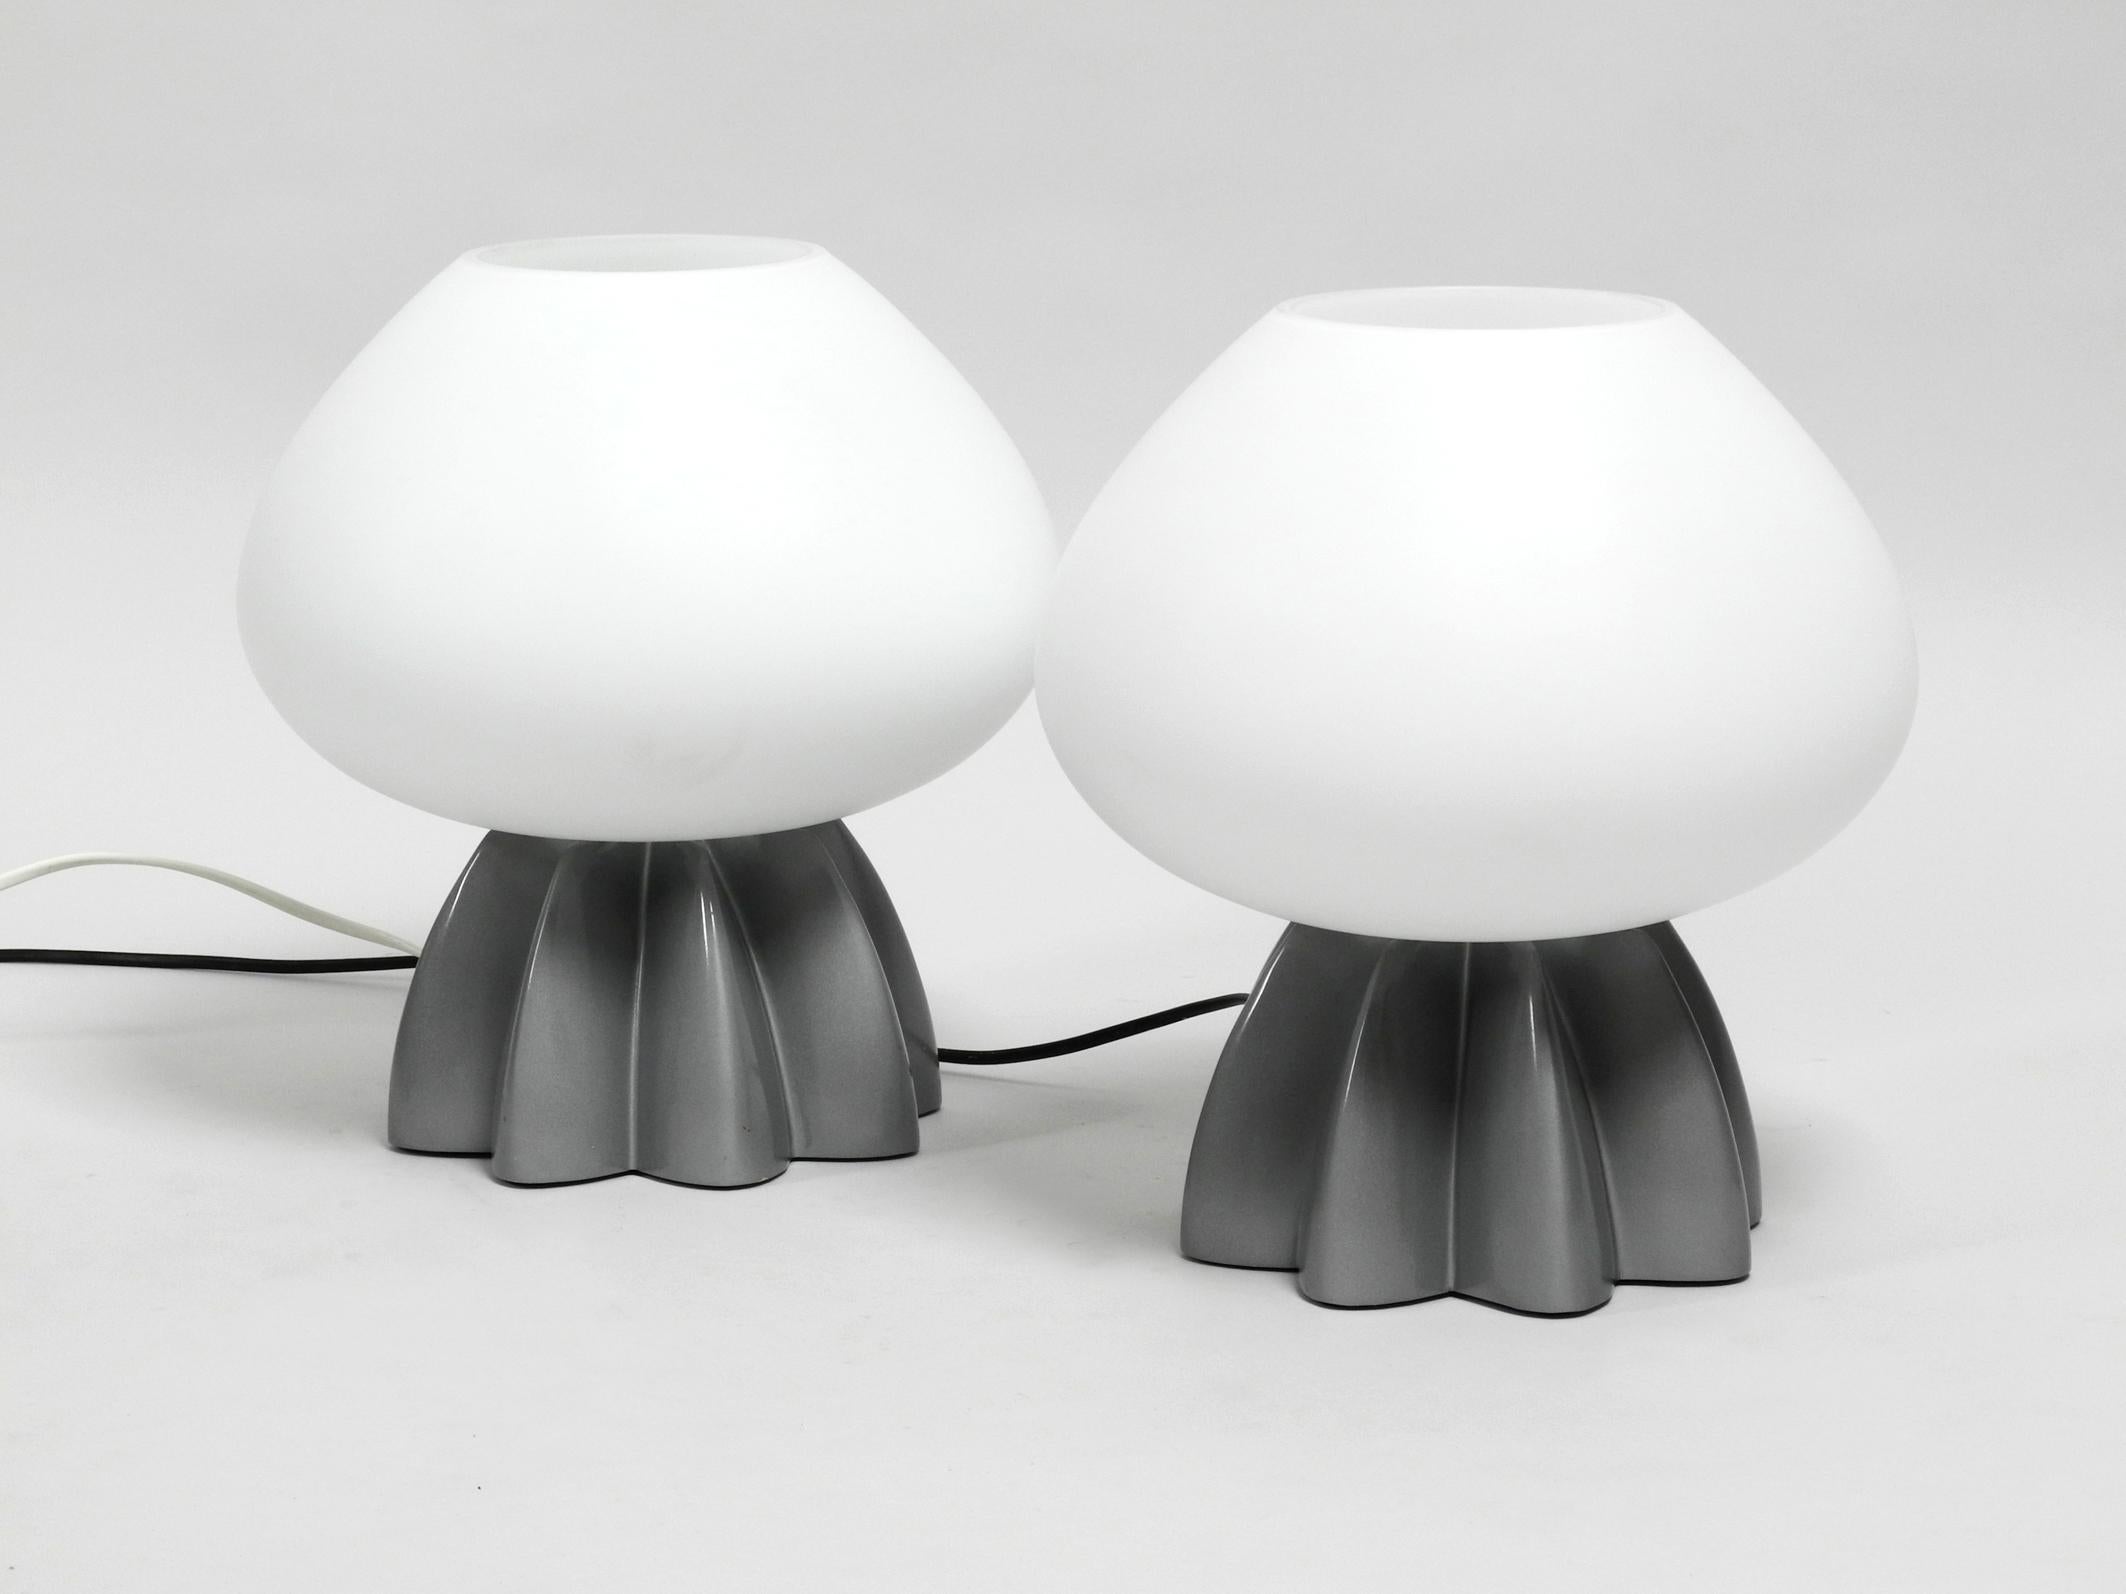 Pair of very rare large 1980s table lamps by Rodolfo Dordoni for Foscarini Murano. Model 